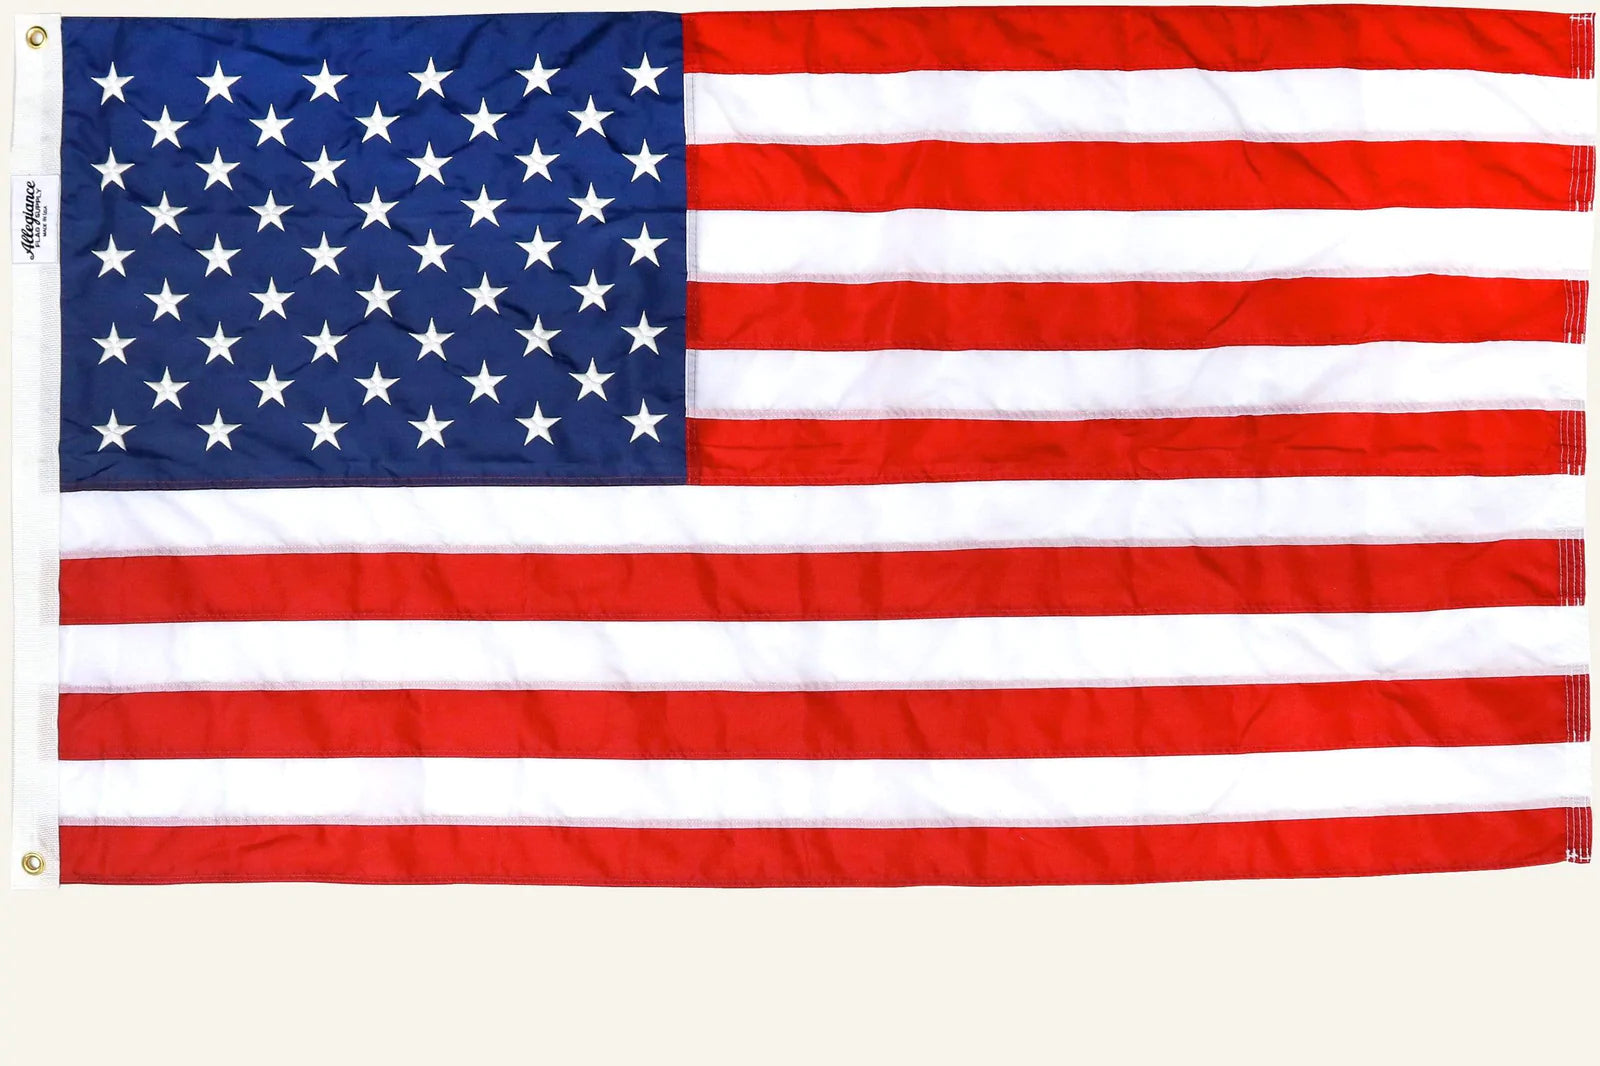 3' x 5' American Flag